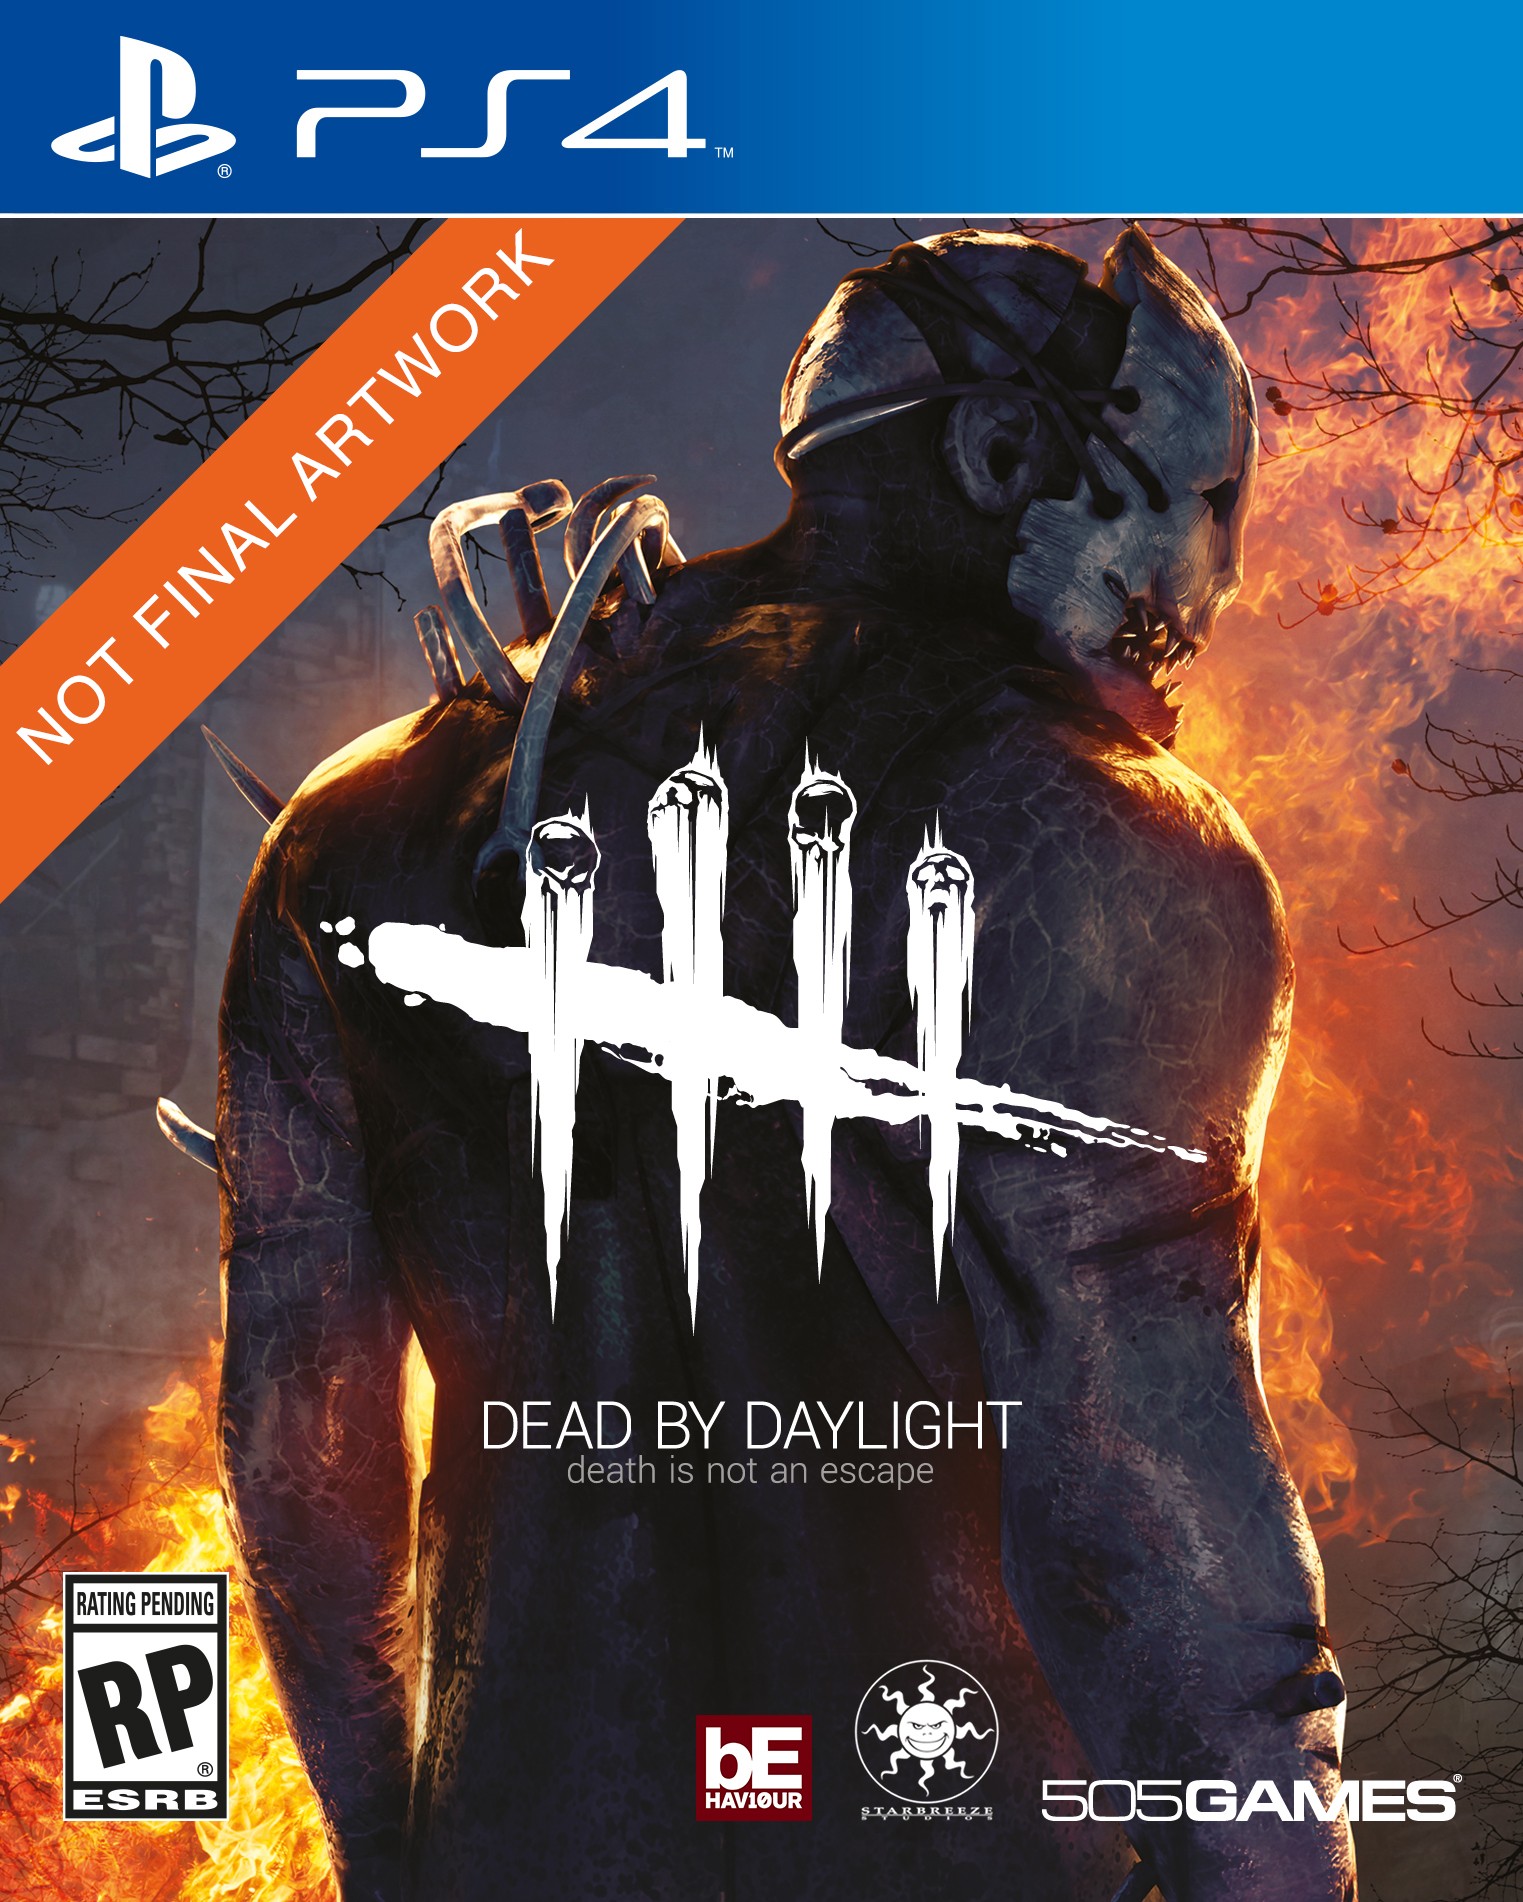 2D PS4 Dead by Daylight ESRB